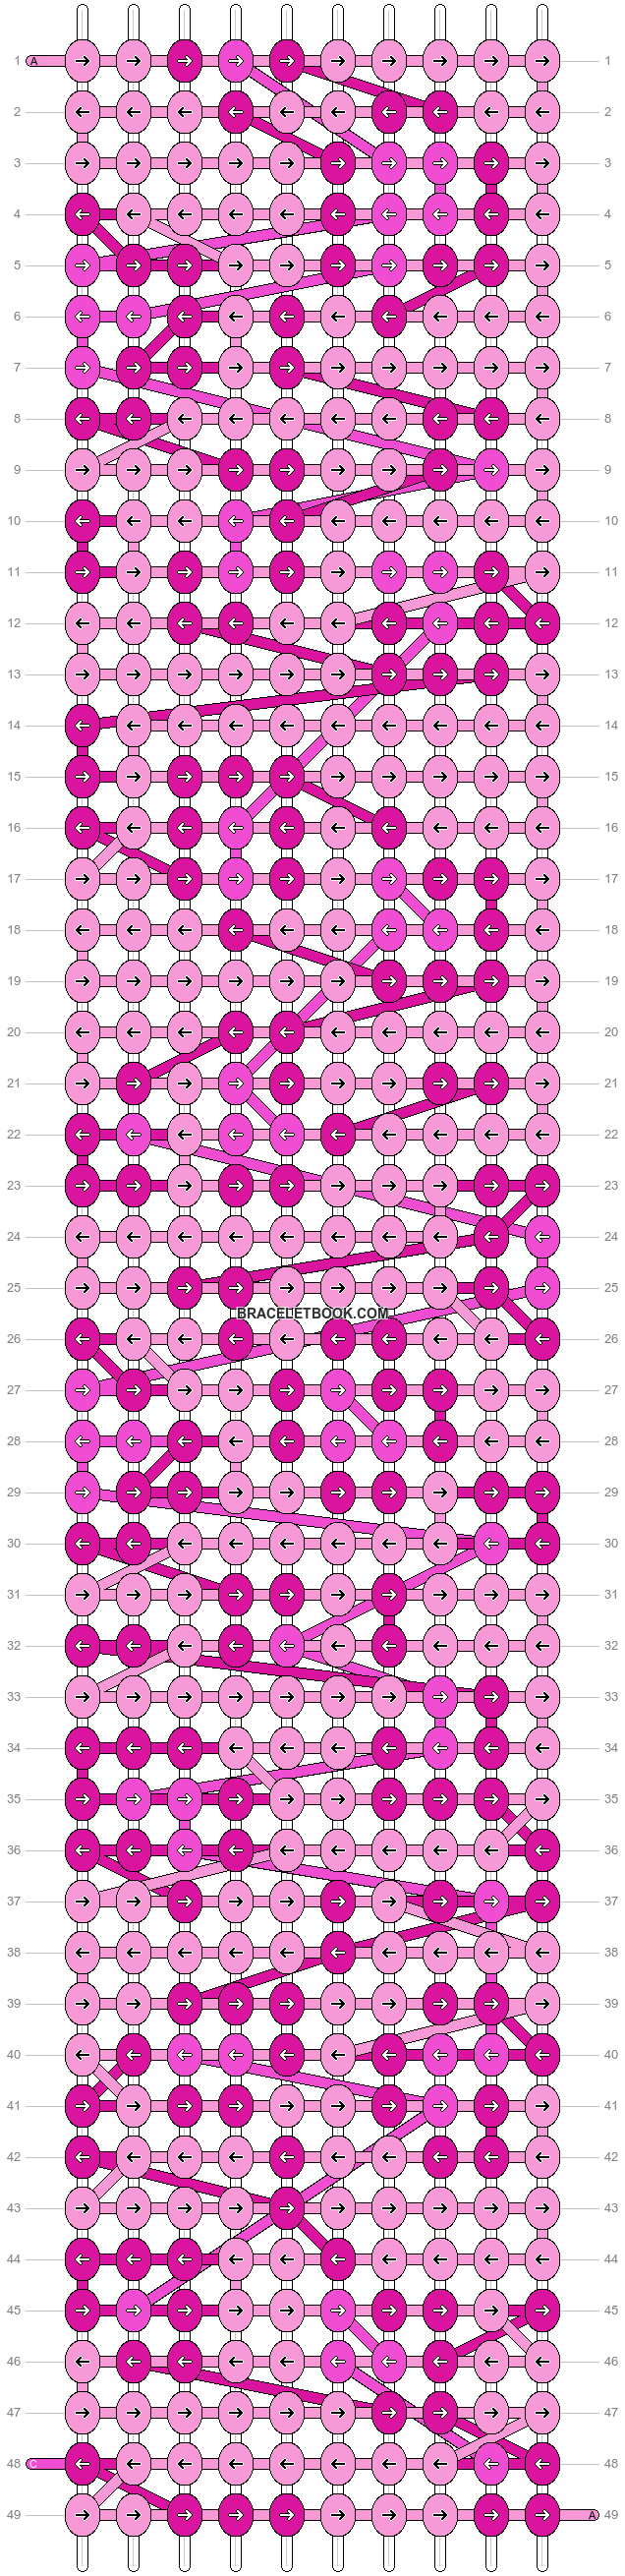 Alpha pattern #45272 variation #95585 pattern